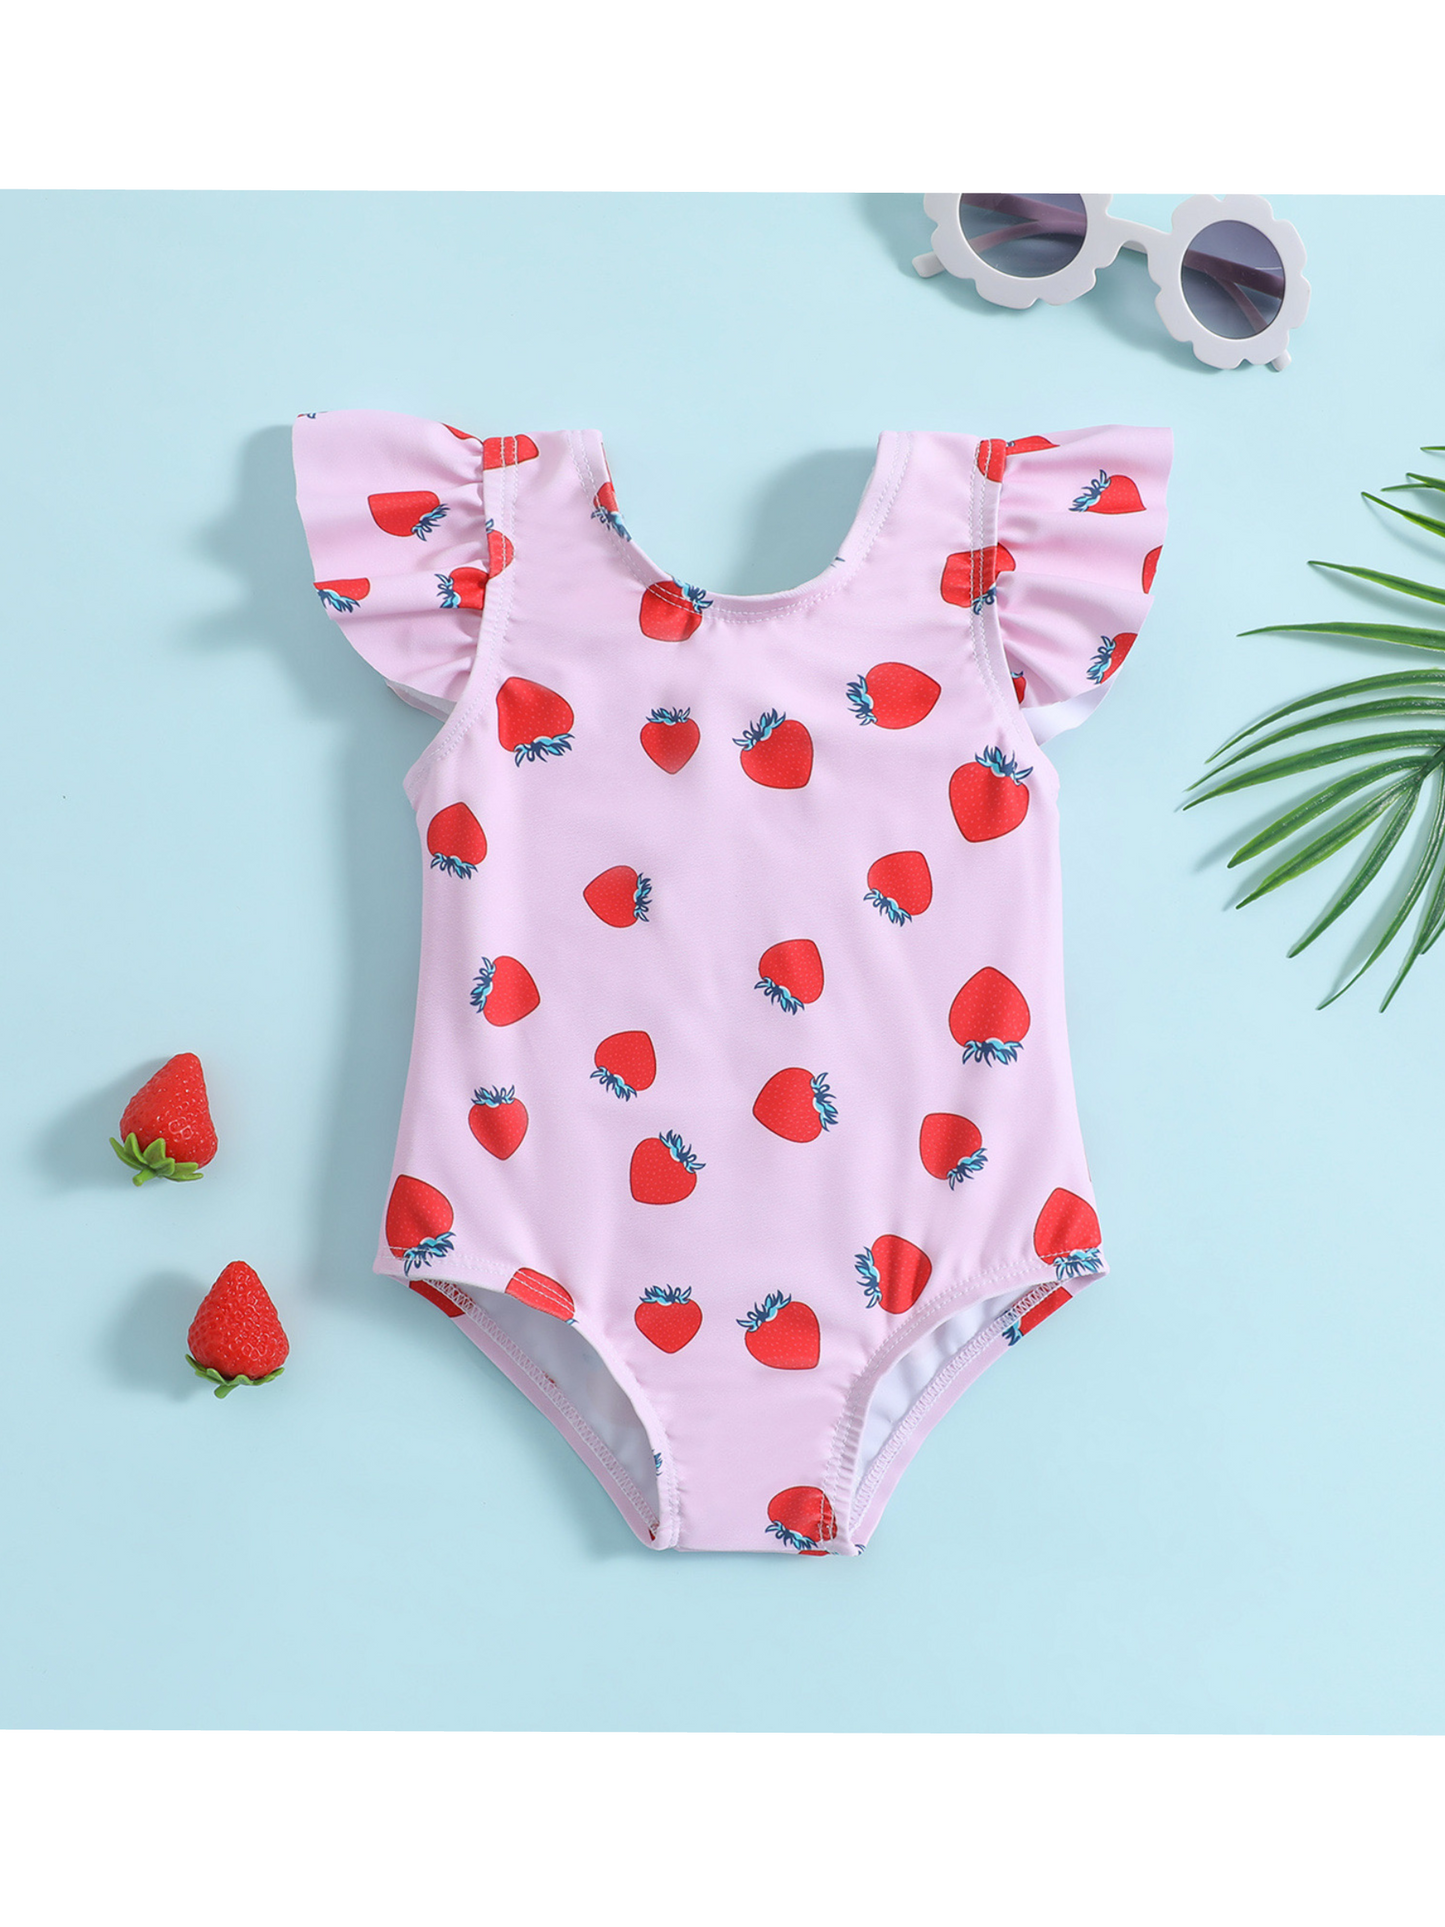 Strawberry print kids swimsuit